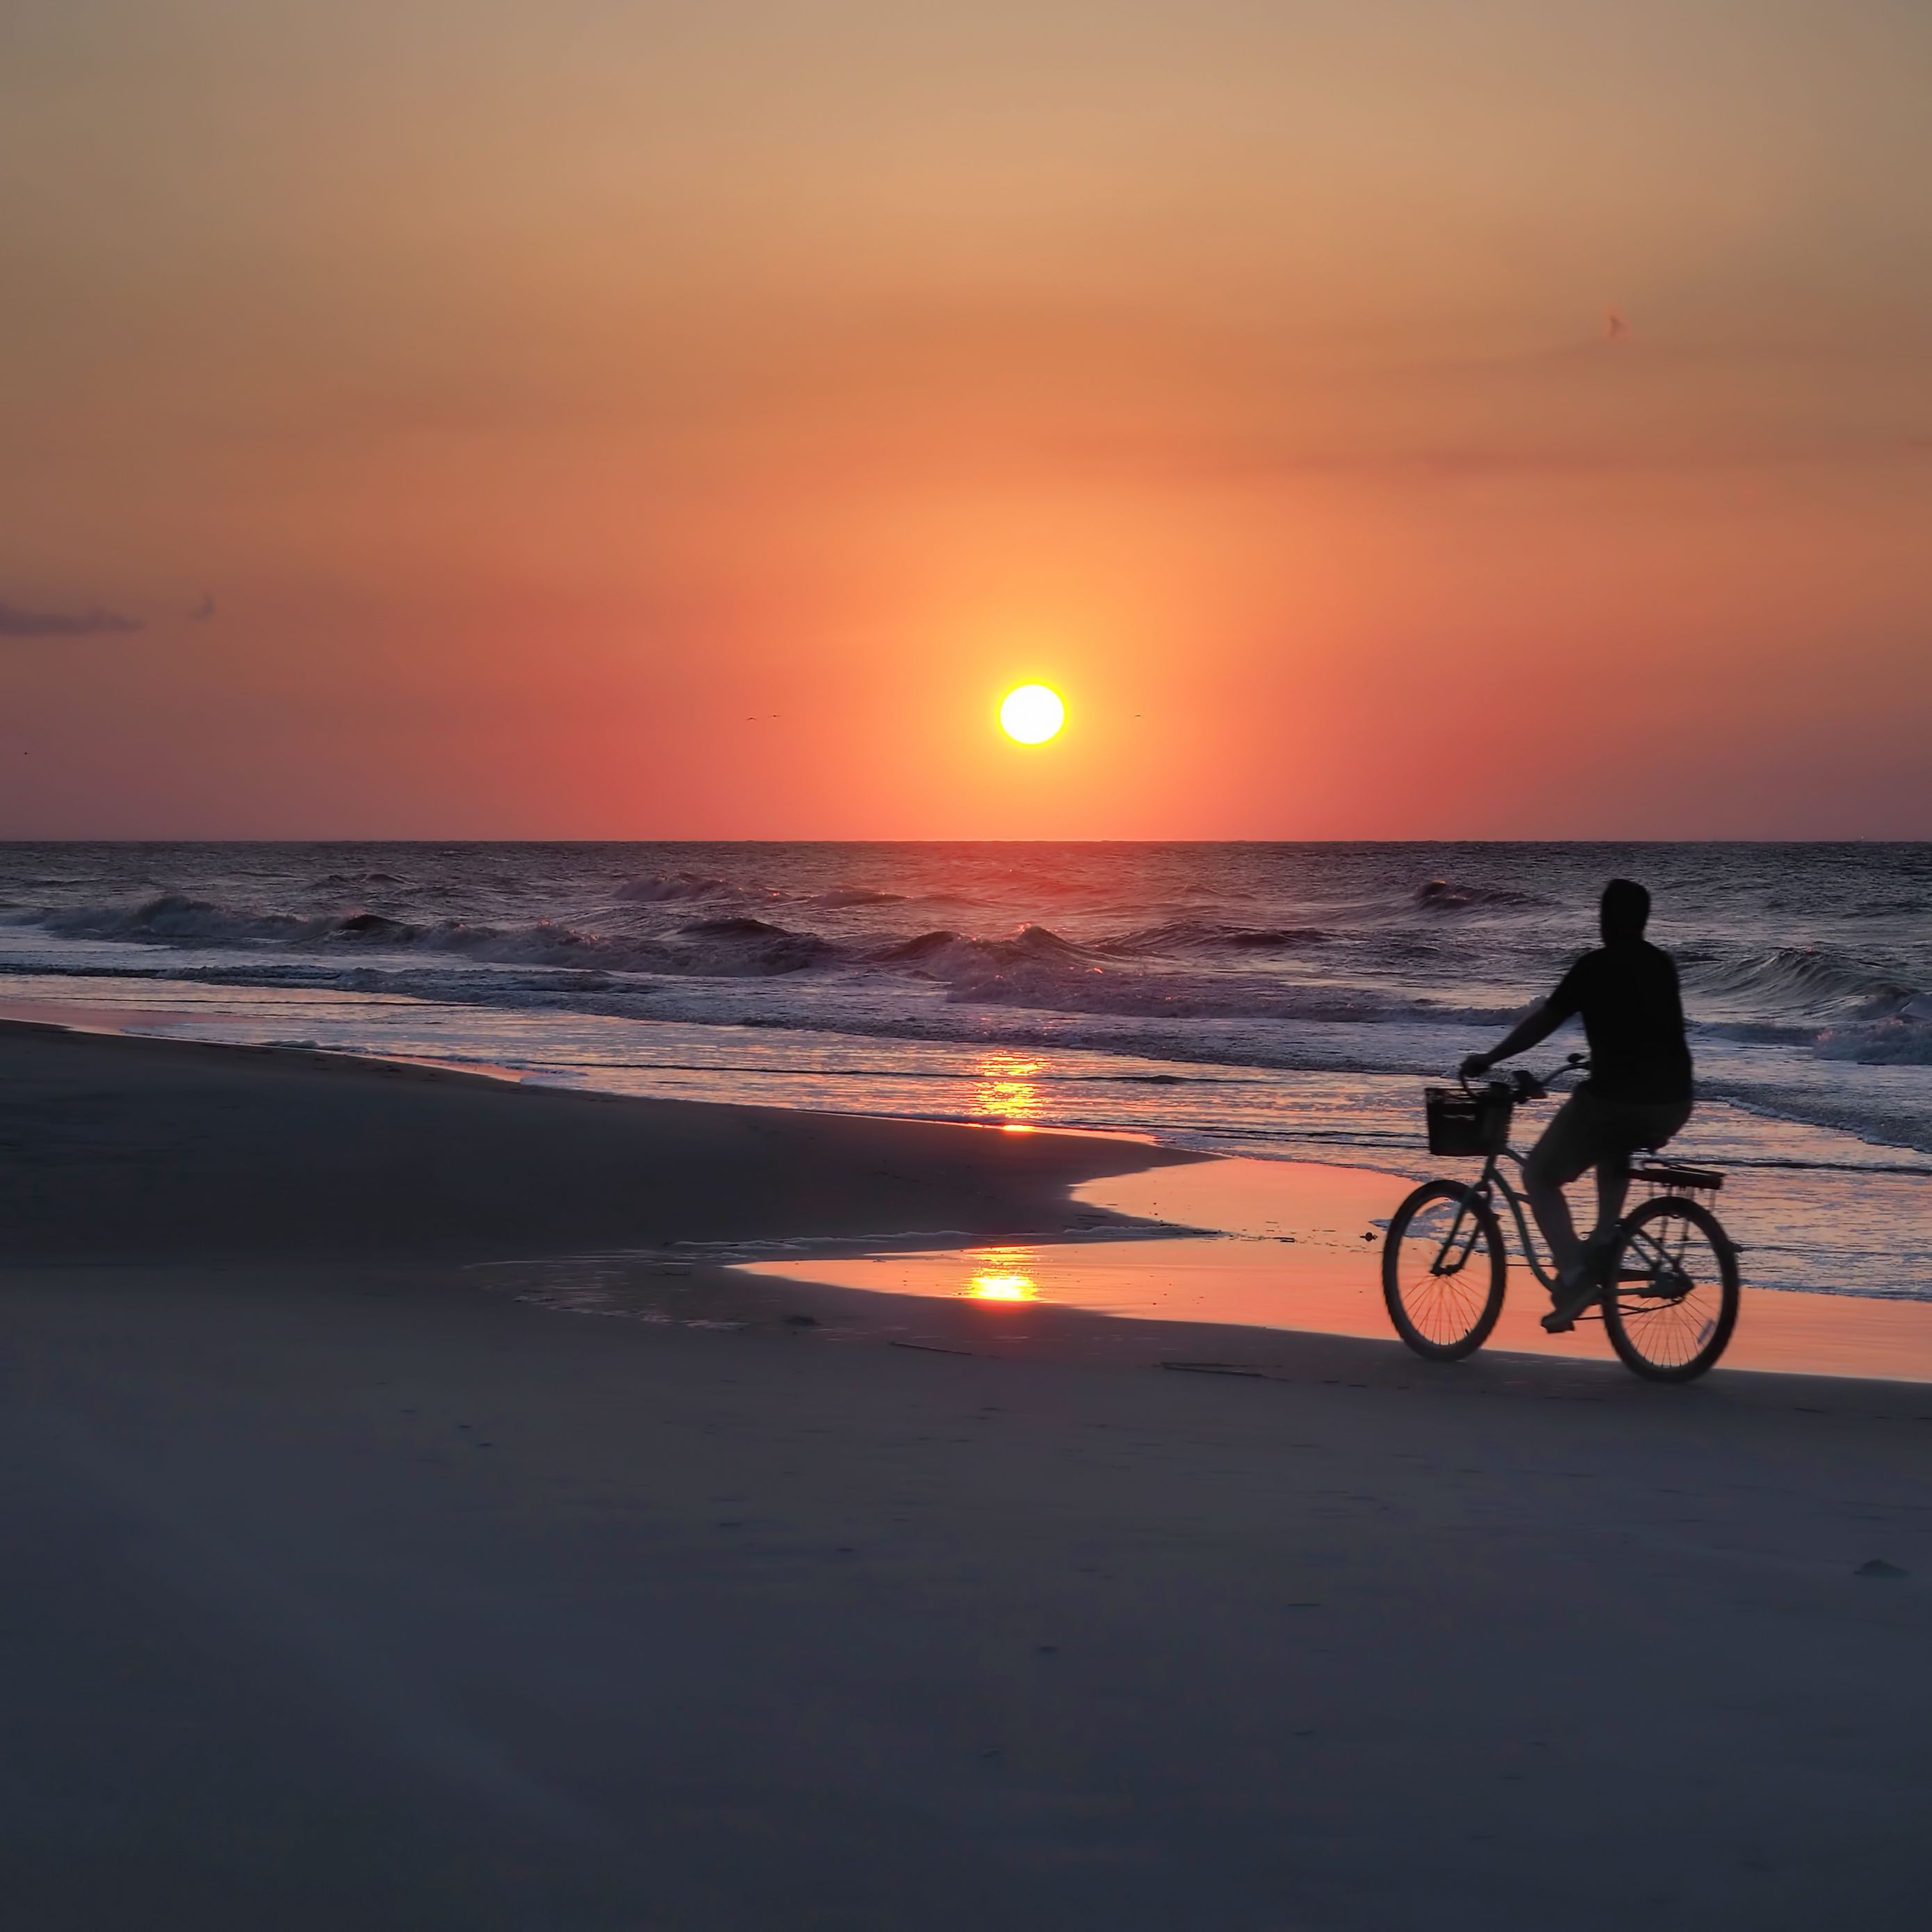 Download wallpaper 2780x2780 beach, man, bicycle, sunrise ipad air ...